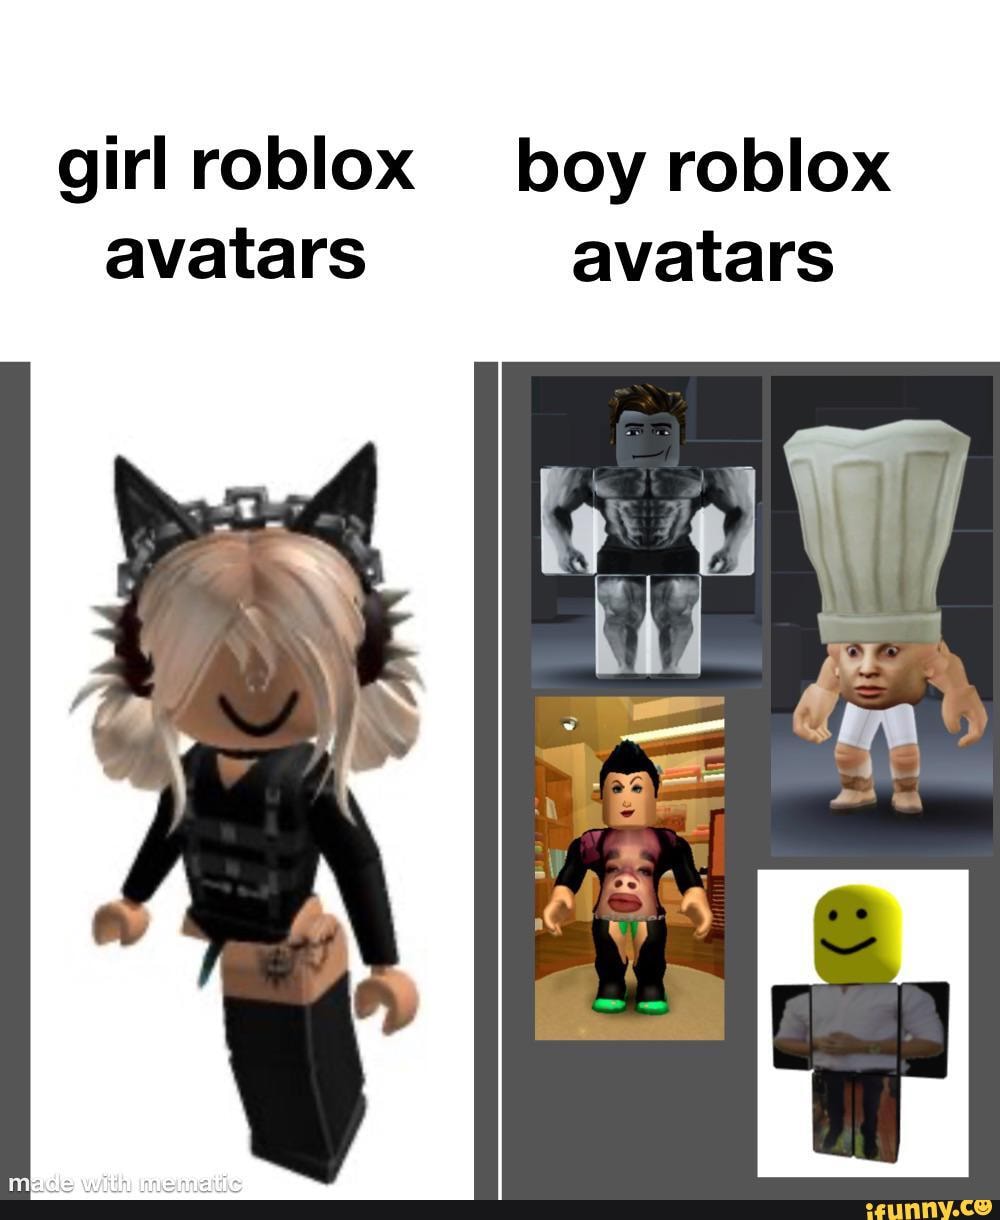 Create comics meme roblox avatar, roblox girl, skin roblox - Comics - Meme -arsenal.com